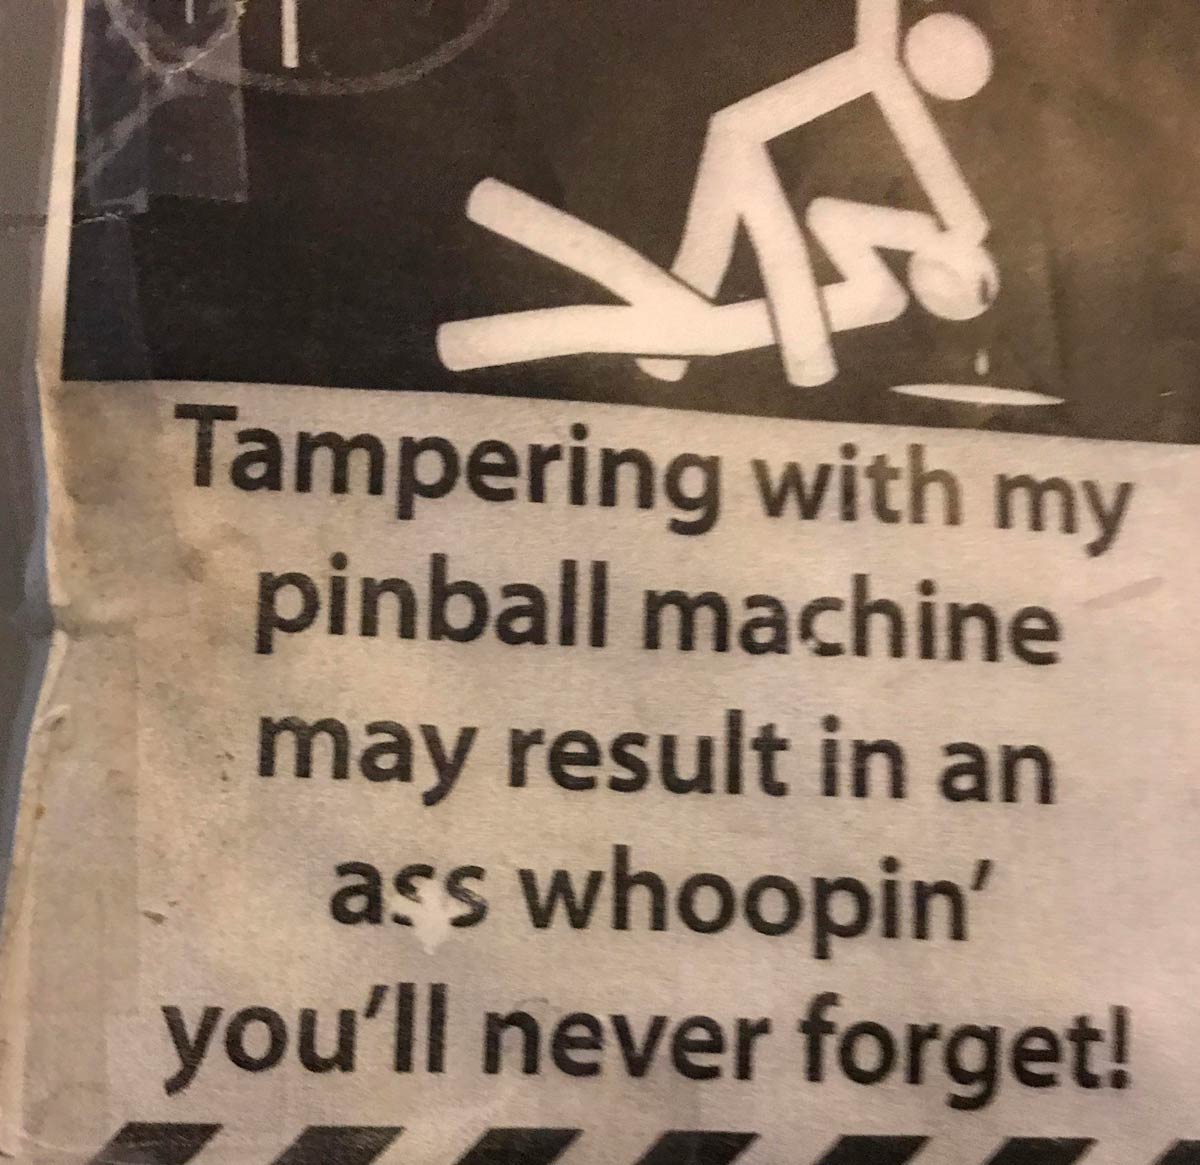 Saw this on a pinball machine